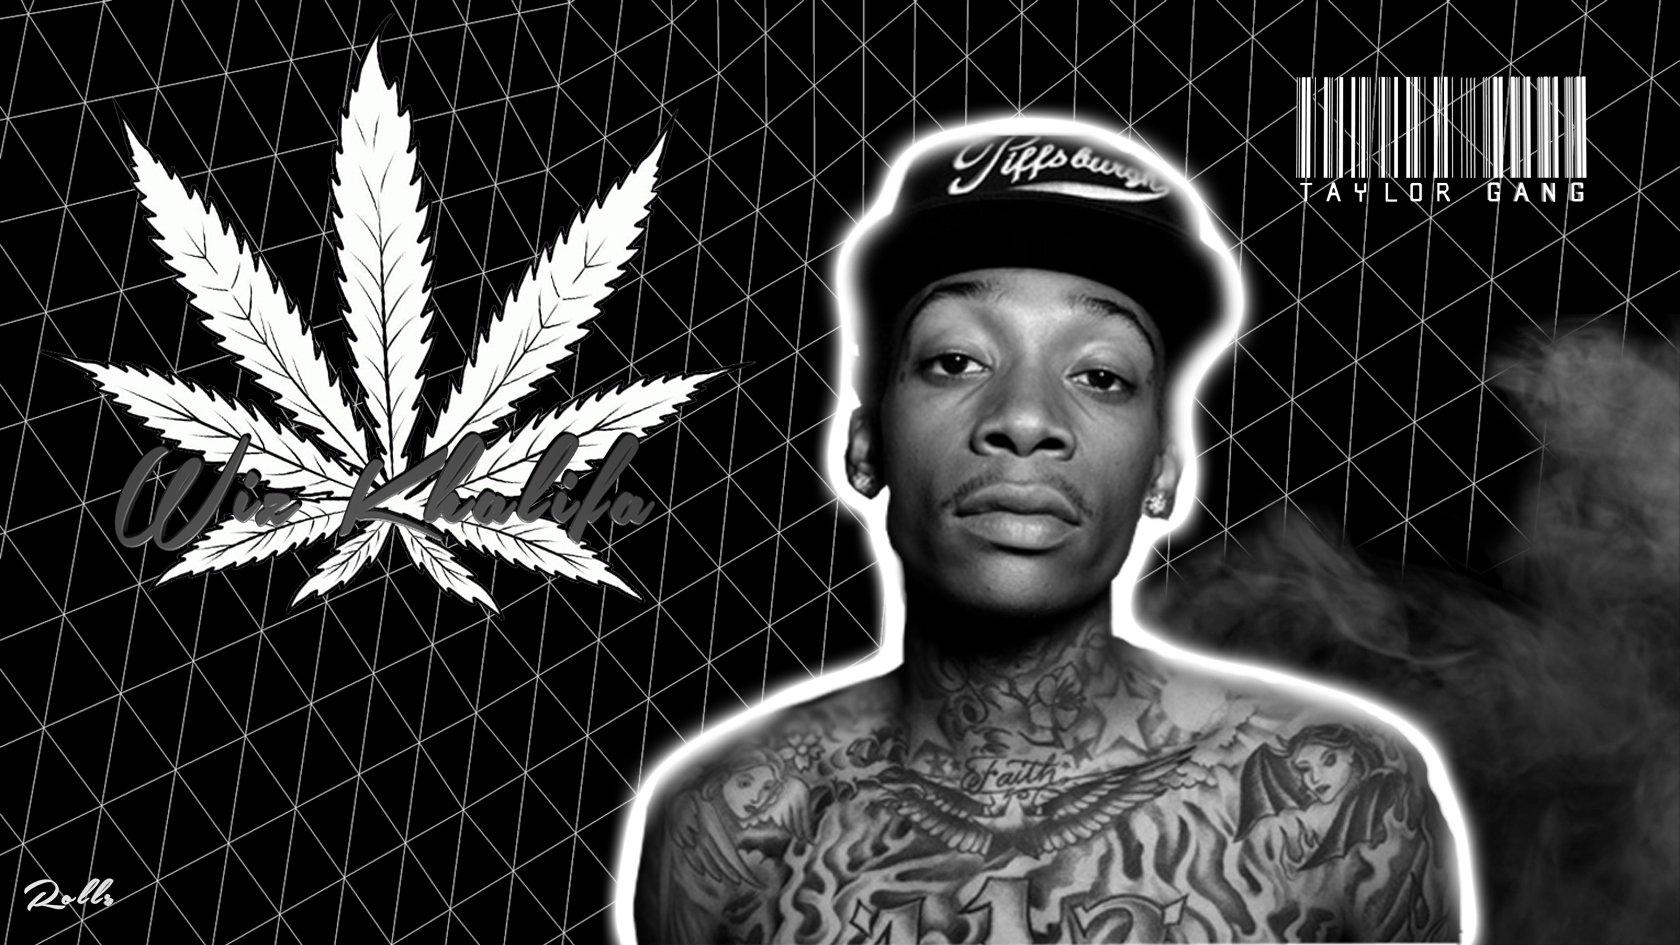 WIZ KHALIFA rap rapper hip hop gangsta 1wizk weed drugs marijuana